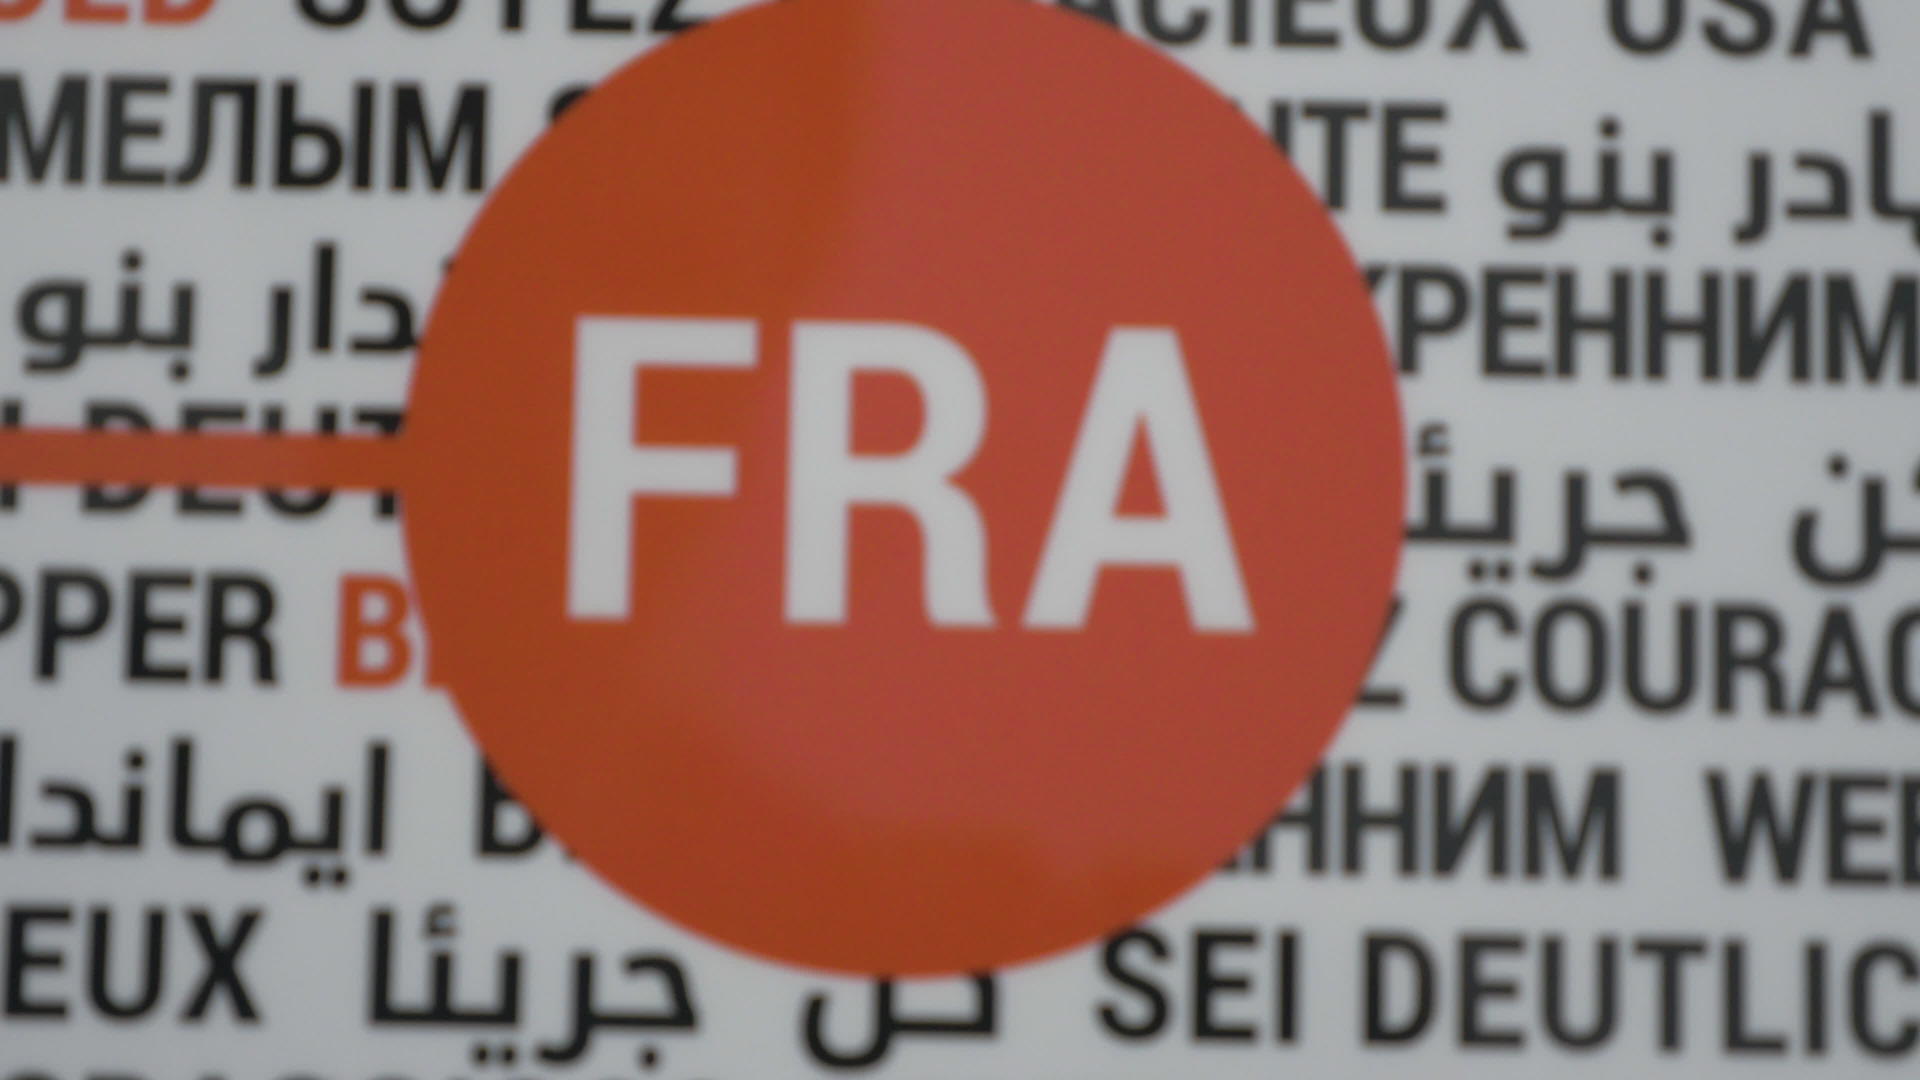 frafranfut激励性短语后面用不同的语言写视频的预览图